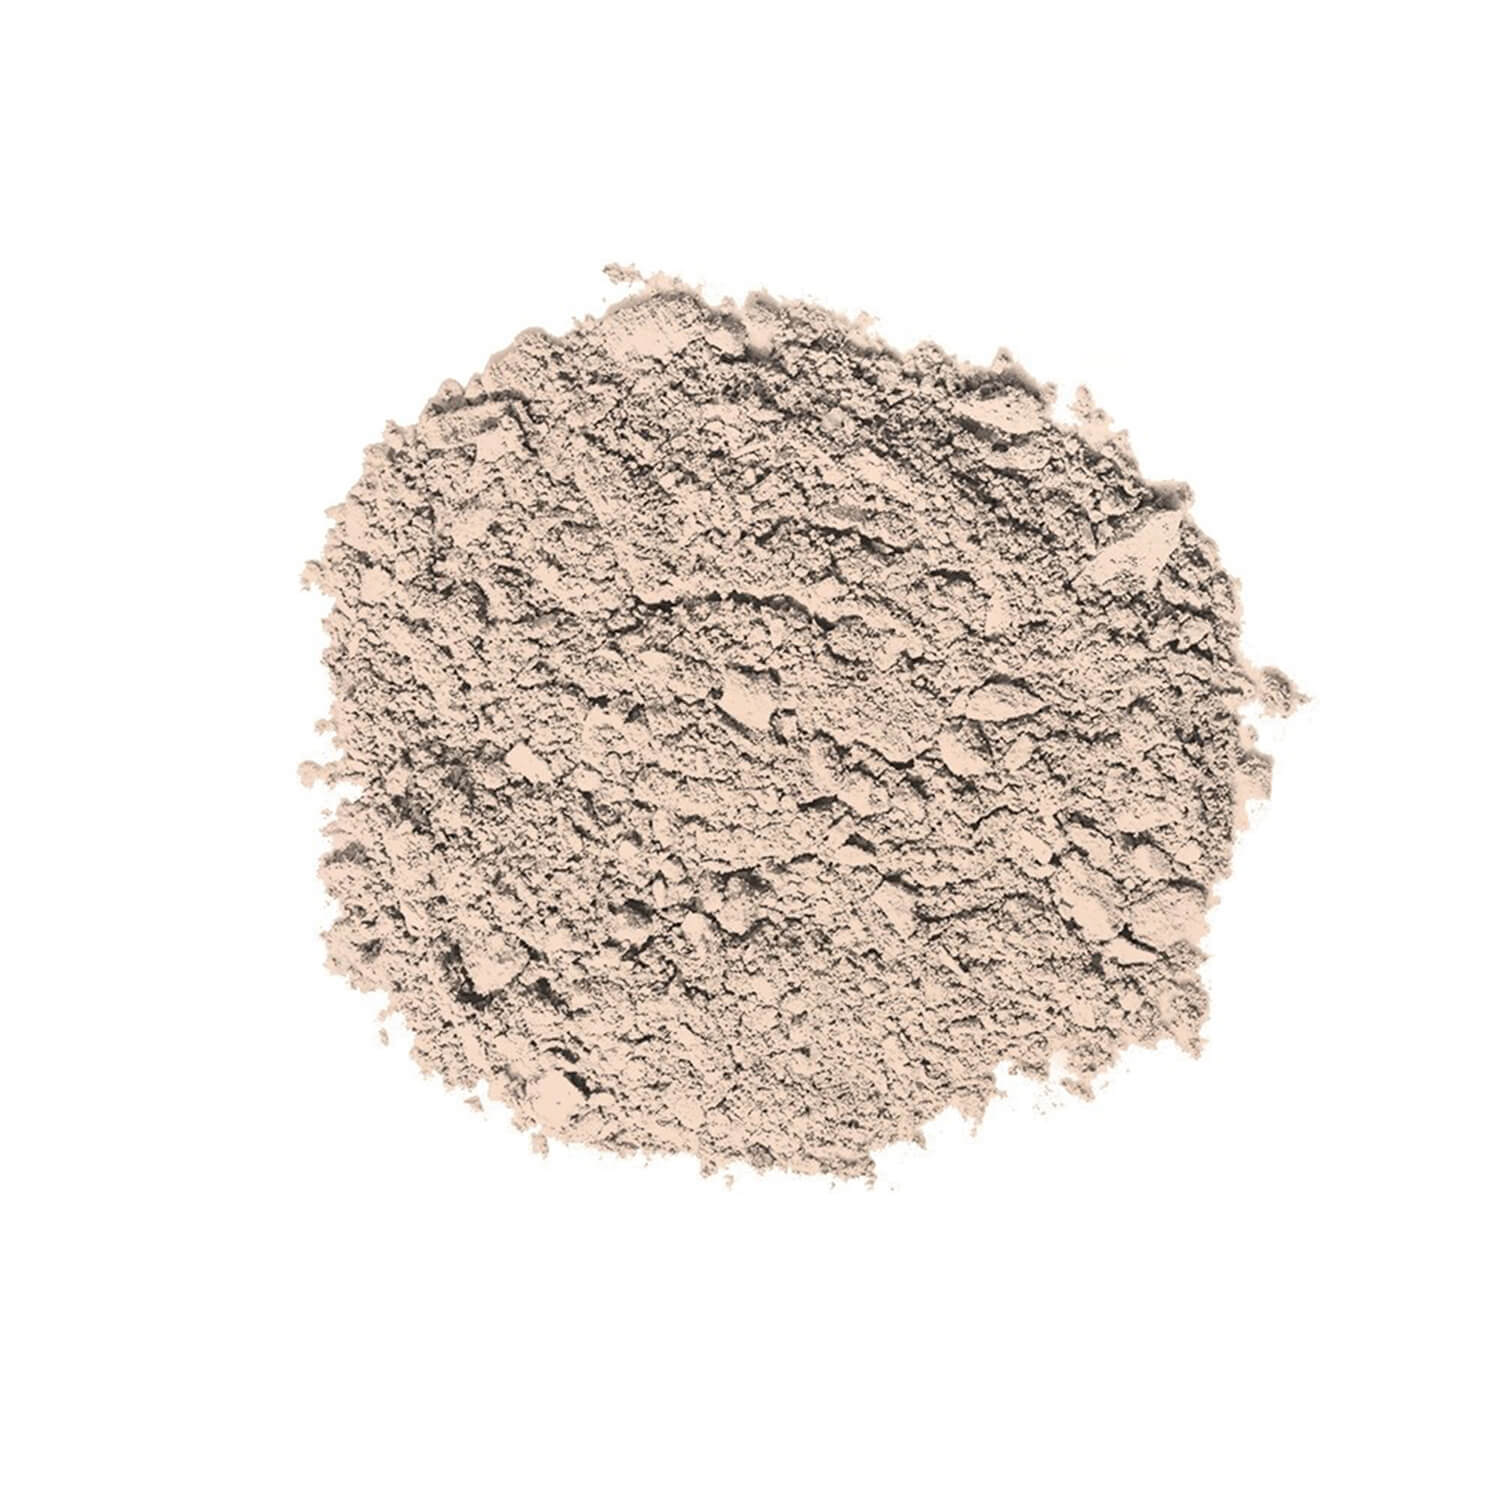 The Compact Powder (Polvo Compacto)